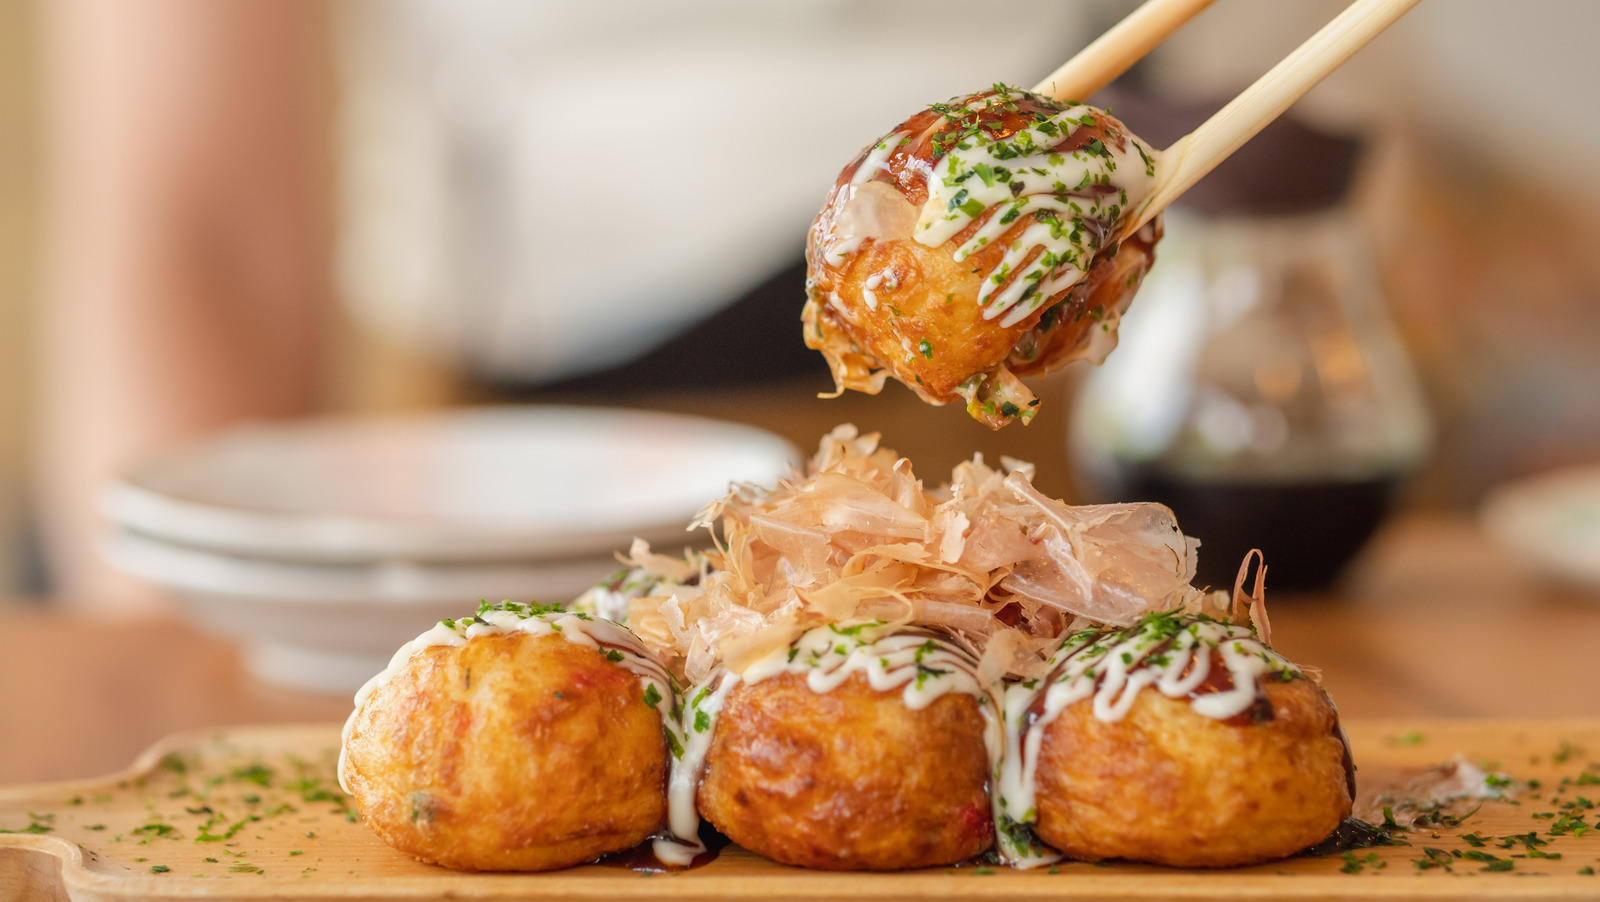 https://www.tastingtable.com/img/gallery/how-takoyaki-came-to-rule-japans-street-food-scene/l-intro-1669221051.jpg